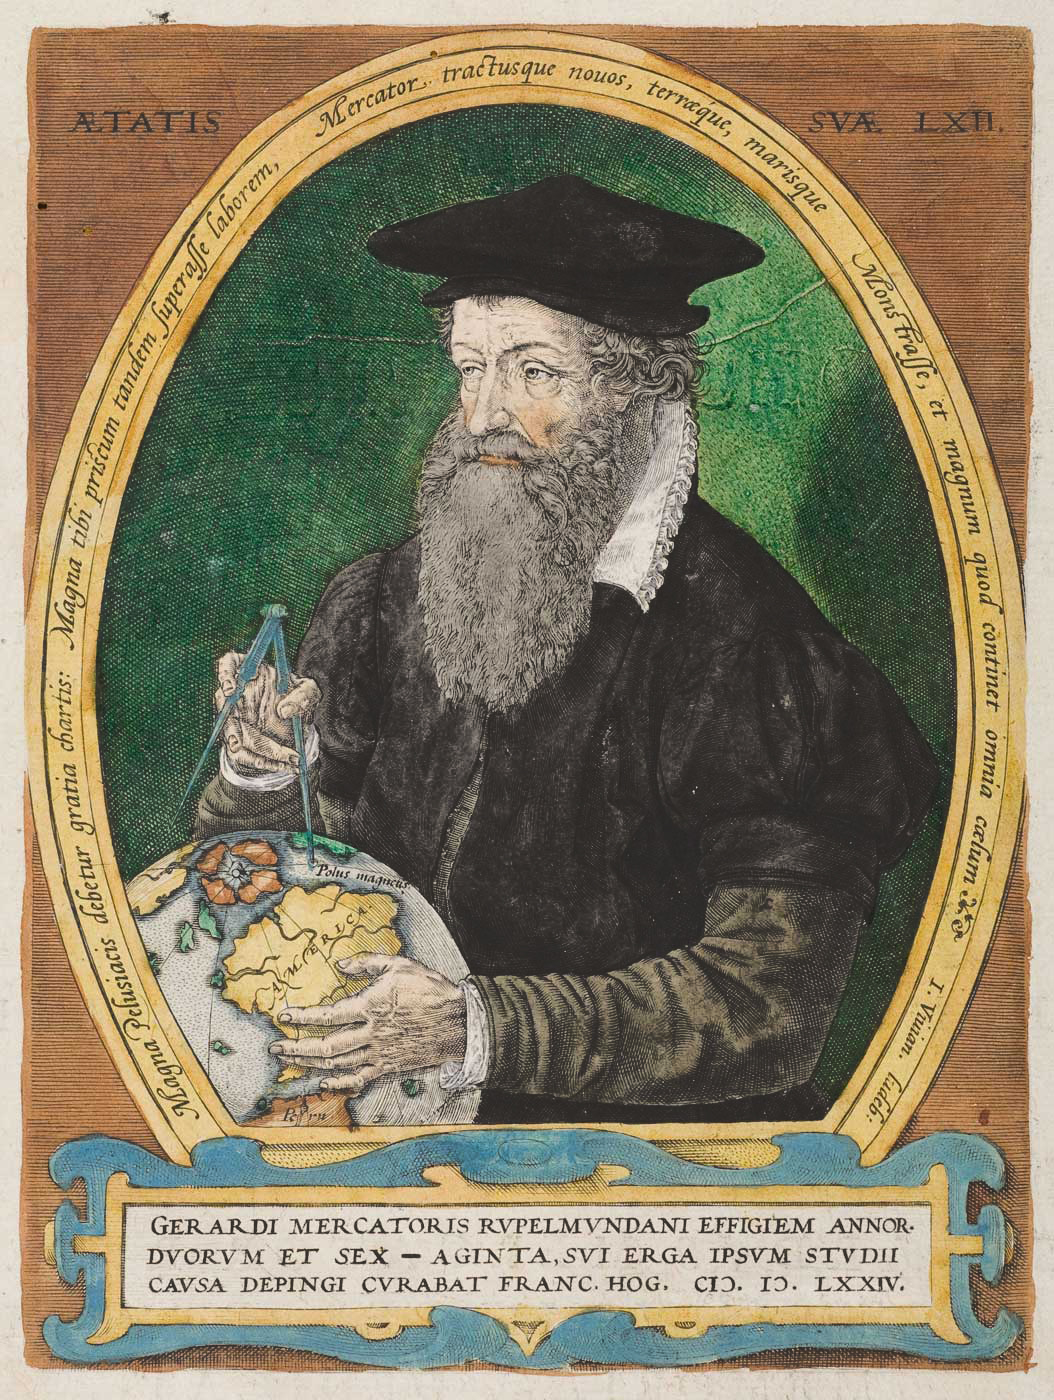 Gérard Mercator